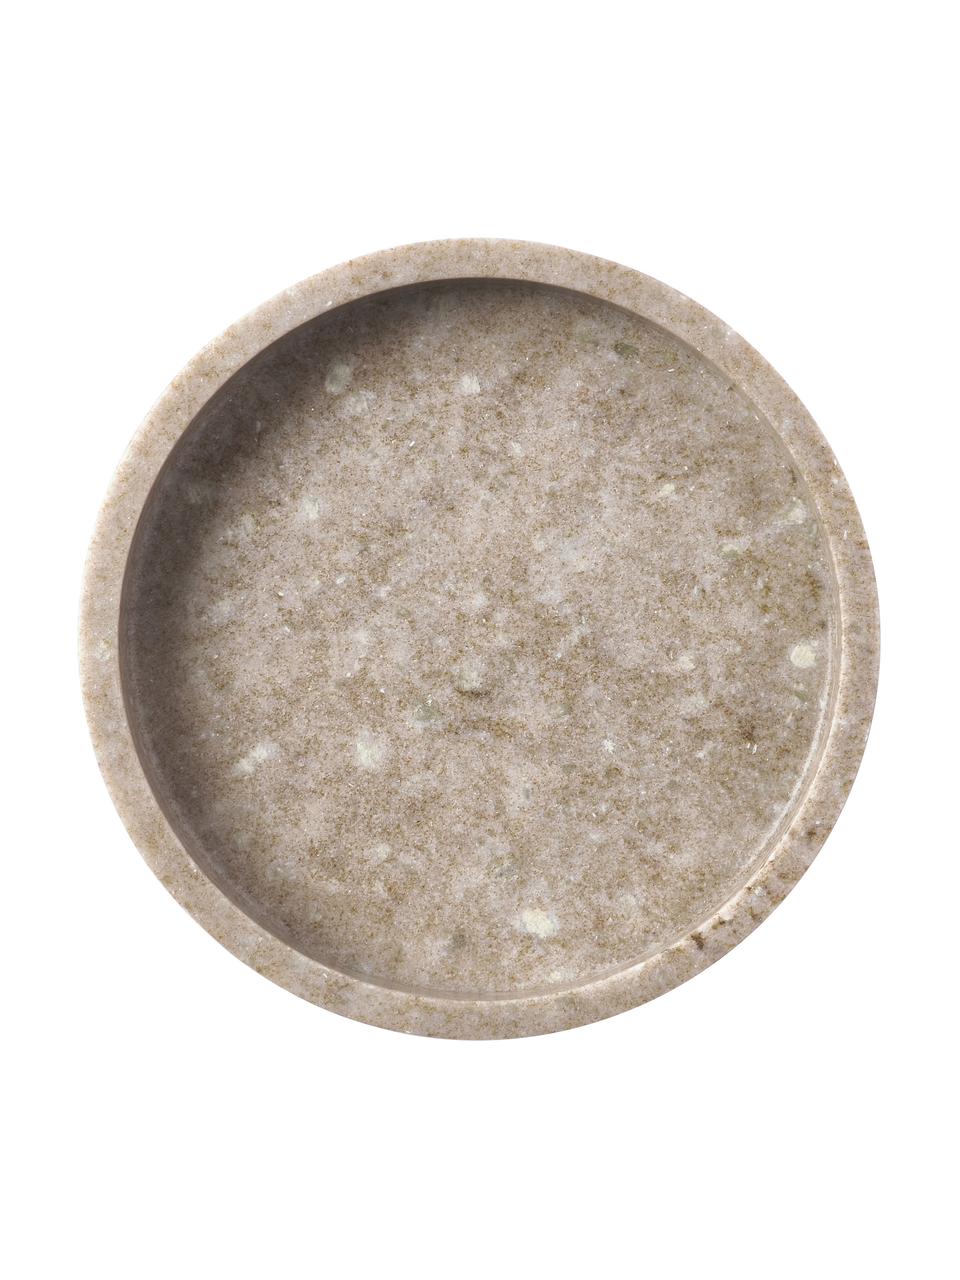 Rundes Deko-Marmor-Tablett Venice in Braun, Marmor, Braun, Ø 25 cm